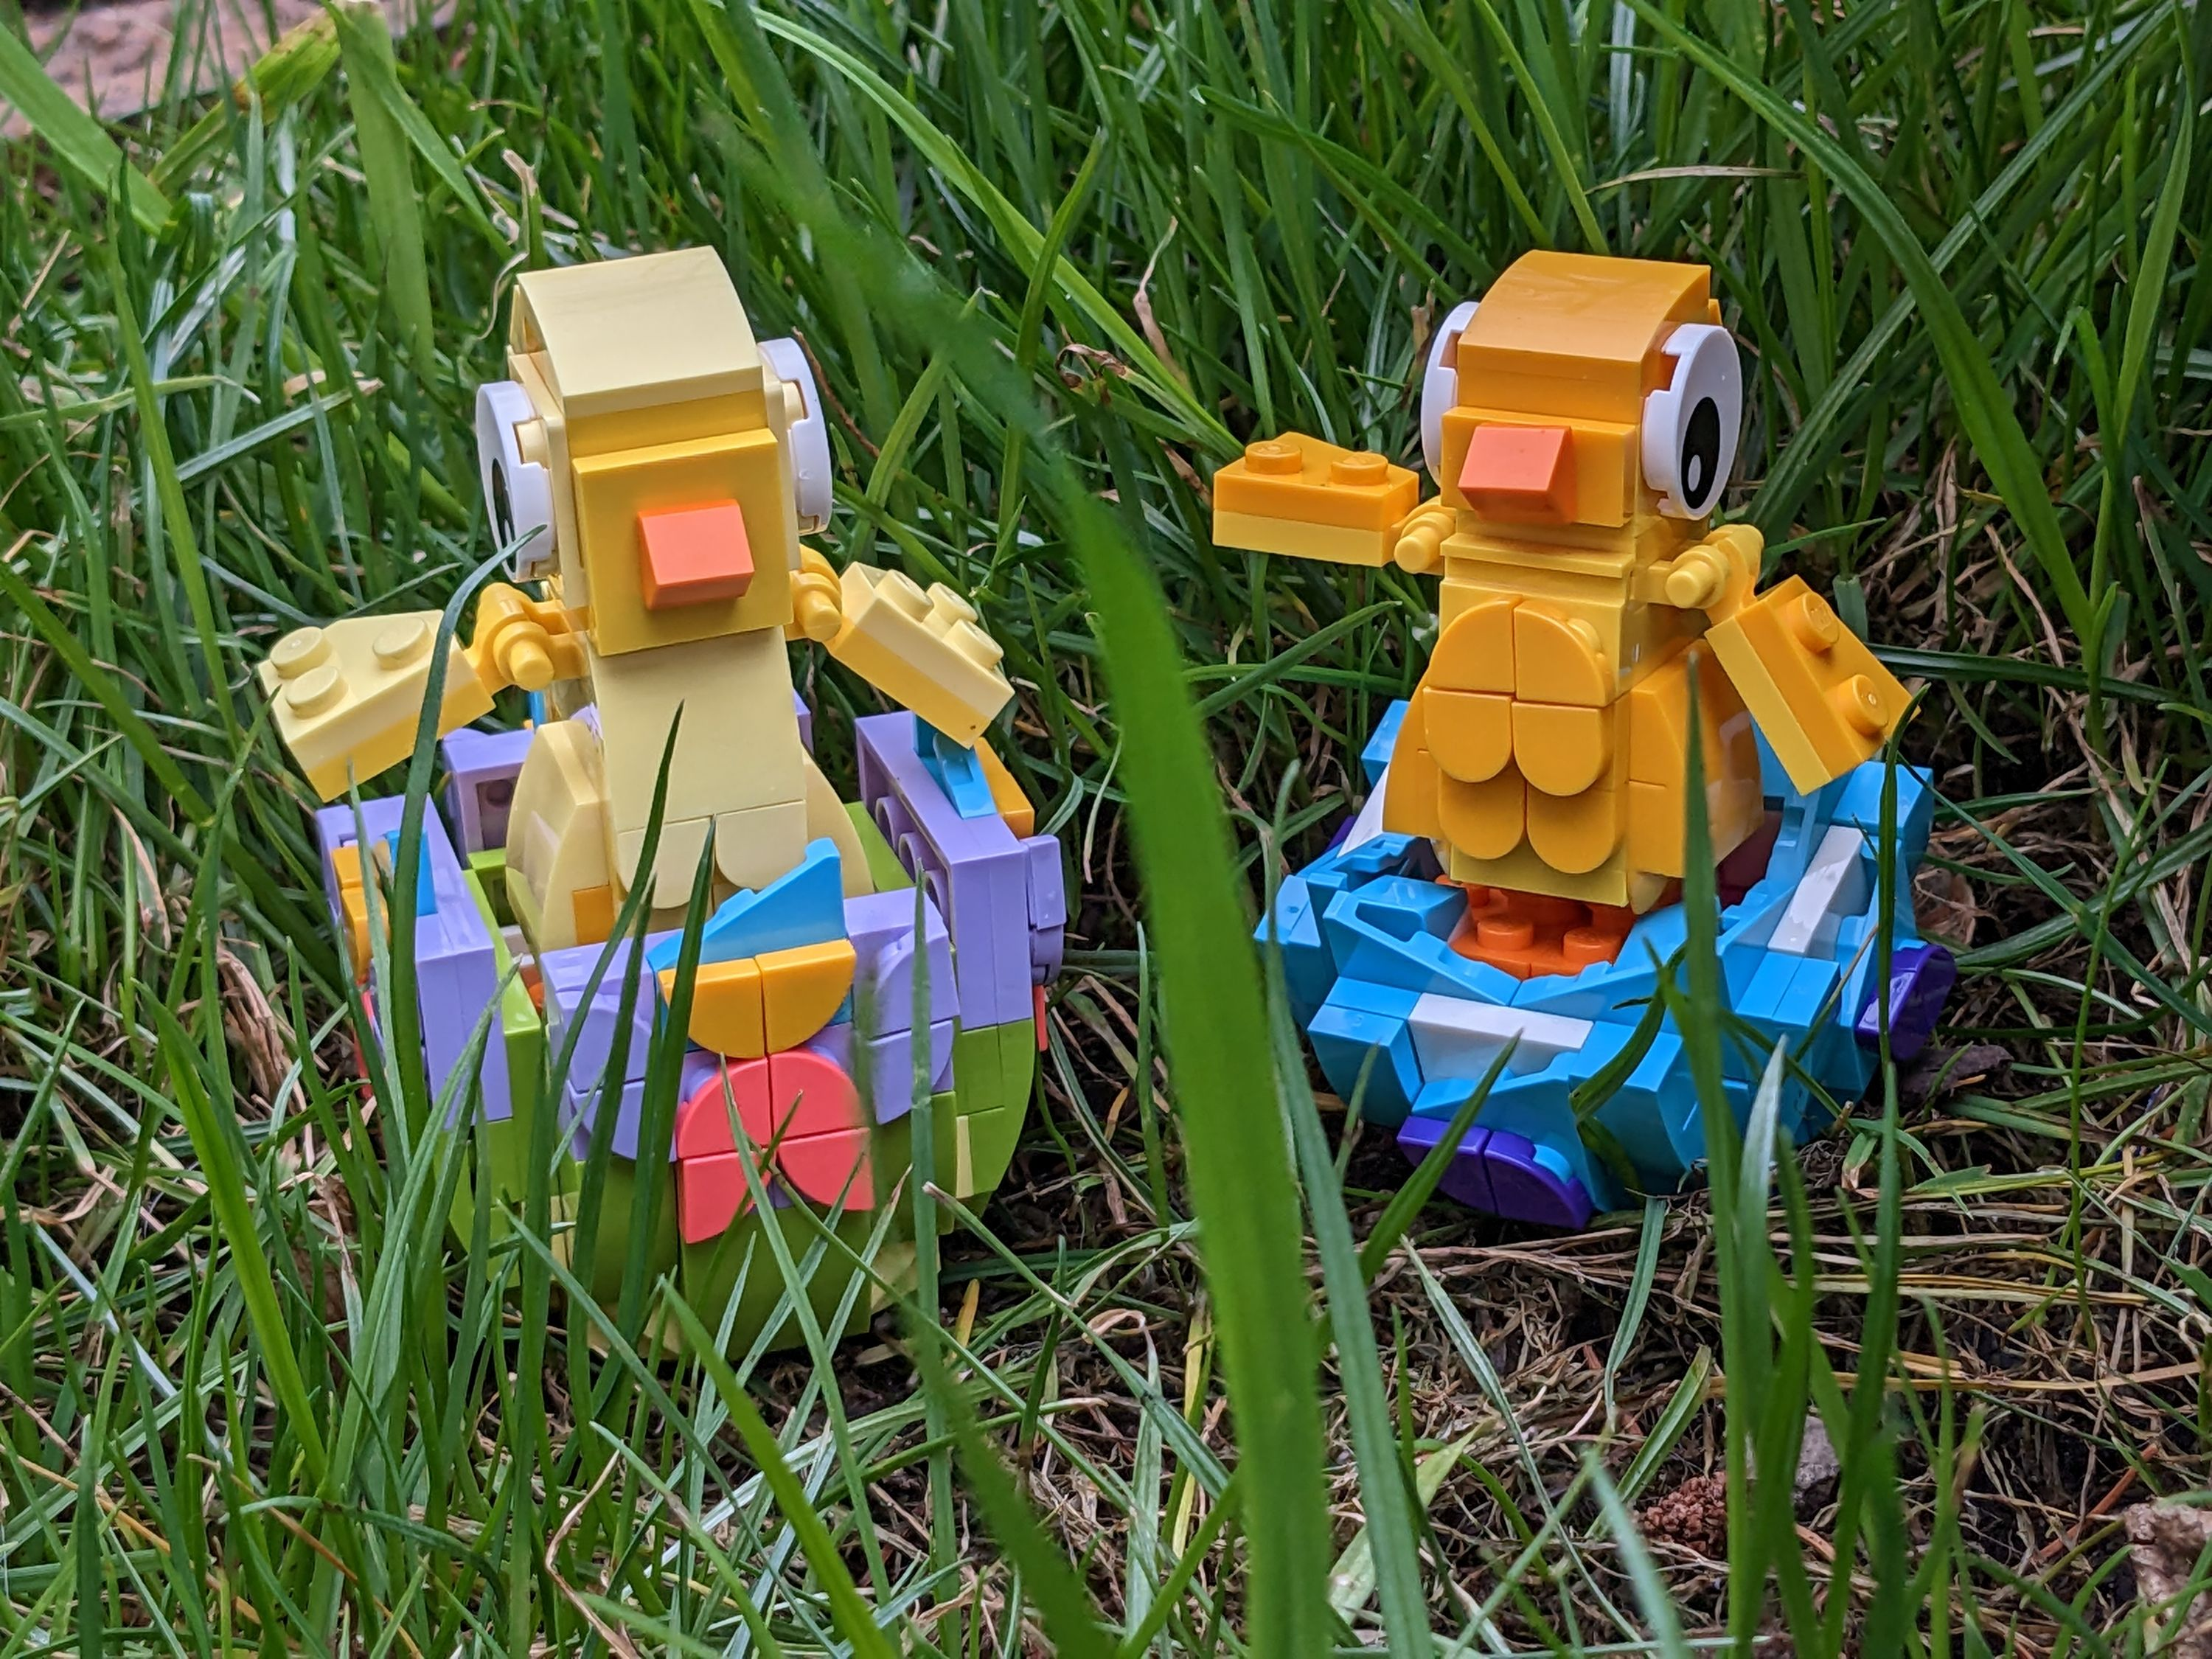 LEGO Set Ostern Osterkueken NEU und Bausatz NEU! - 40527 OVP Teile 318x